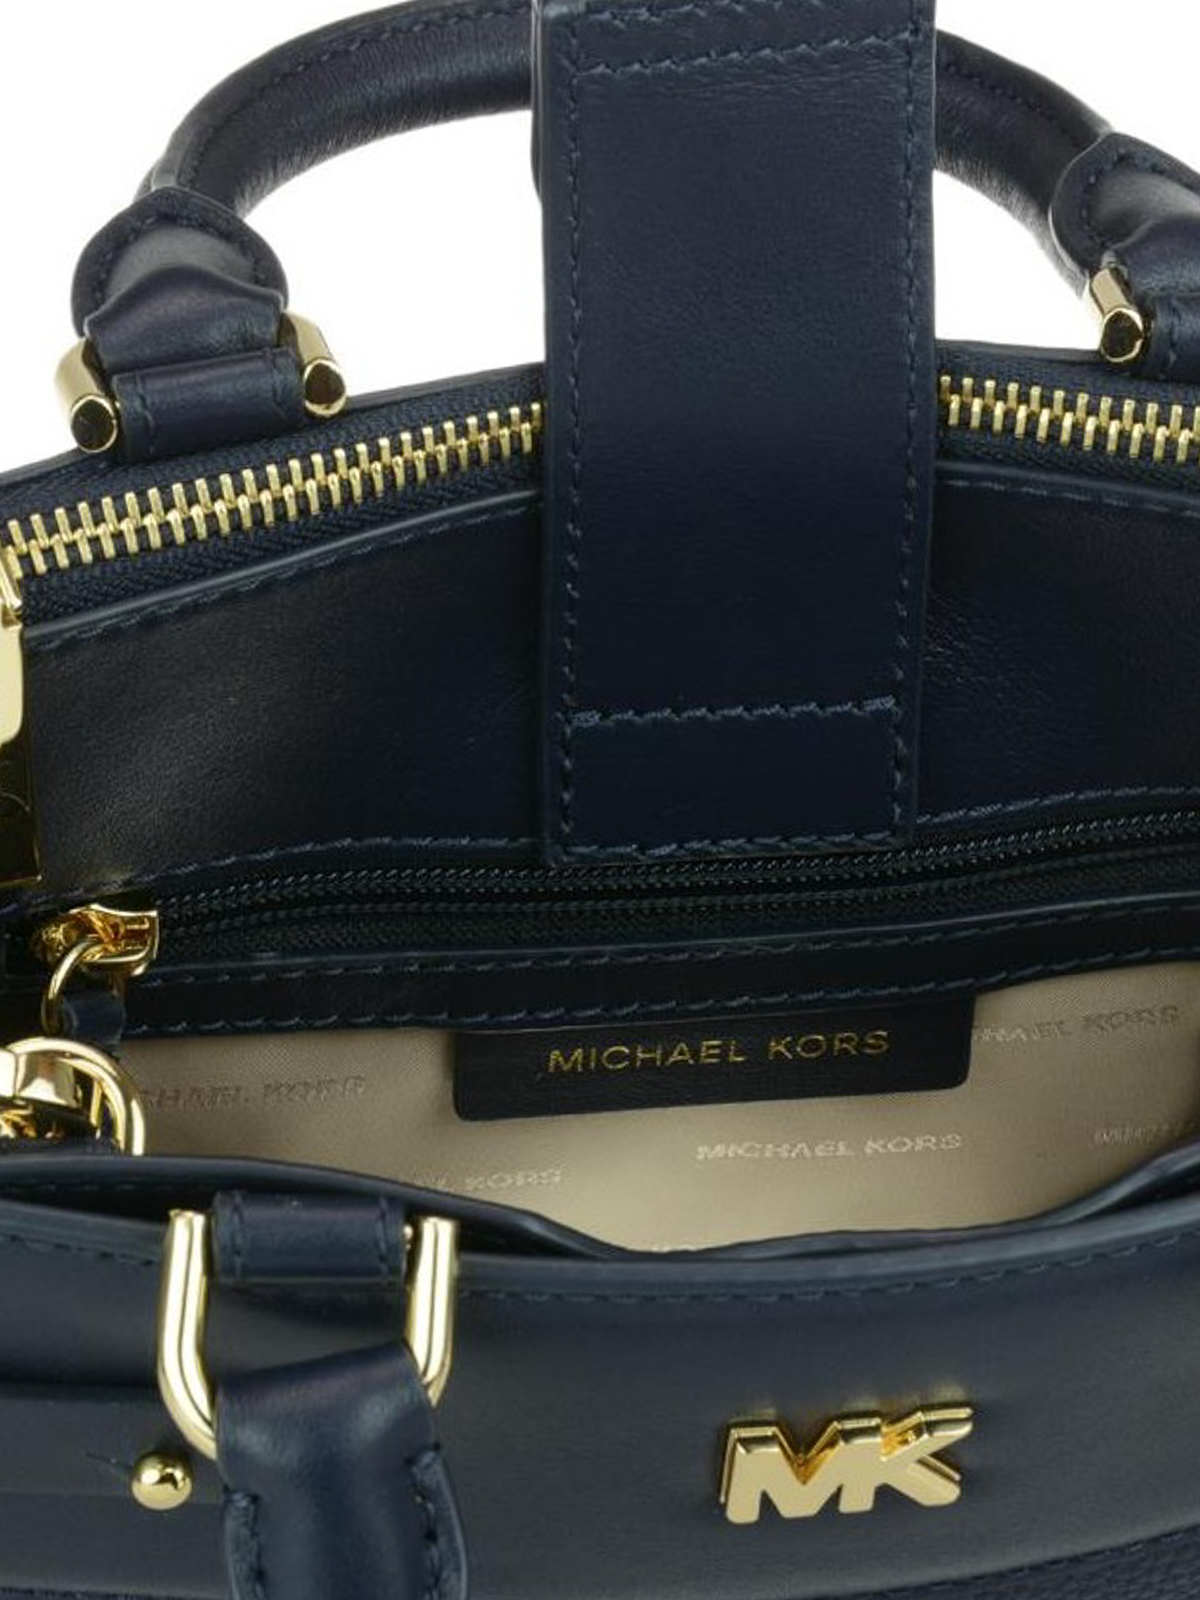 michael kors navy blue leather purse